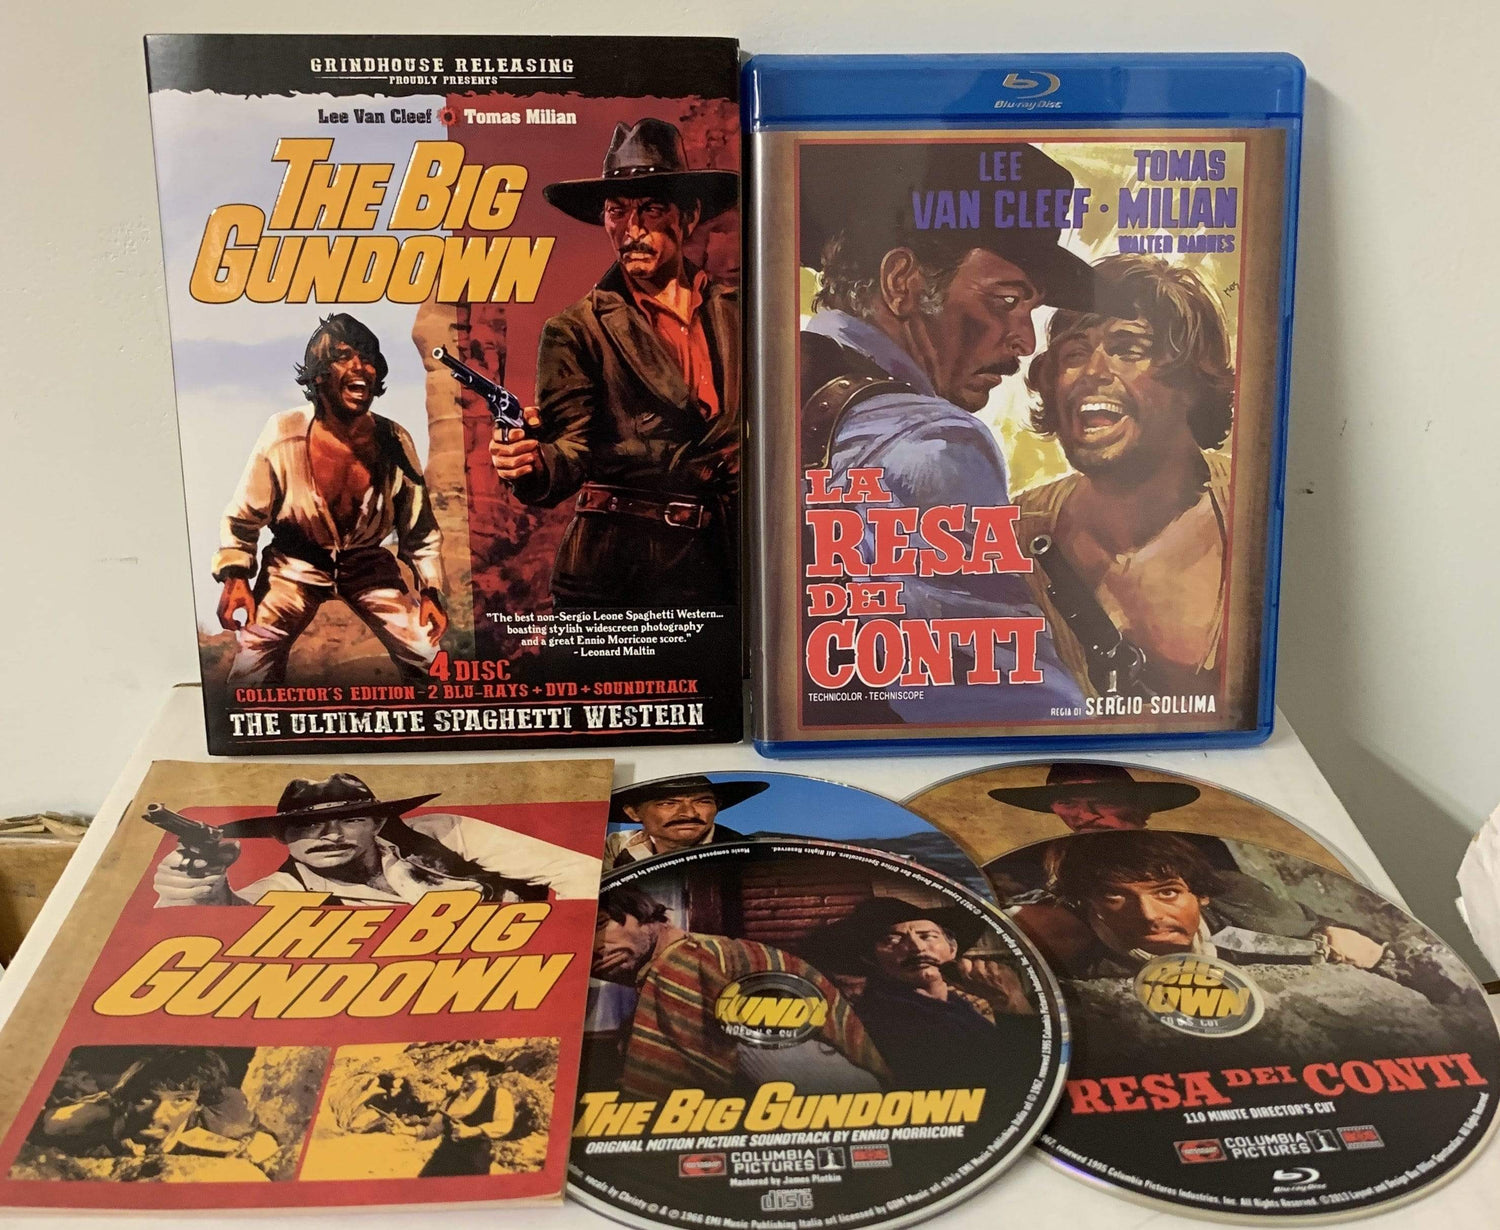 THE BIG GUNDOWN (1966) Deluxe 4 disc (2 Blu-rays + DVD + CD